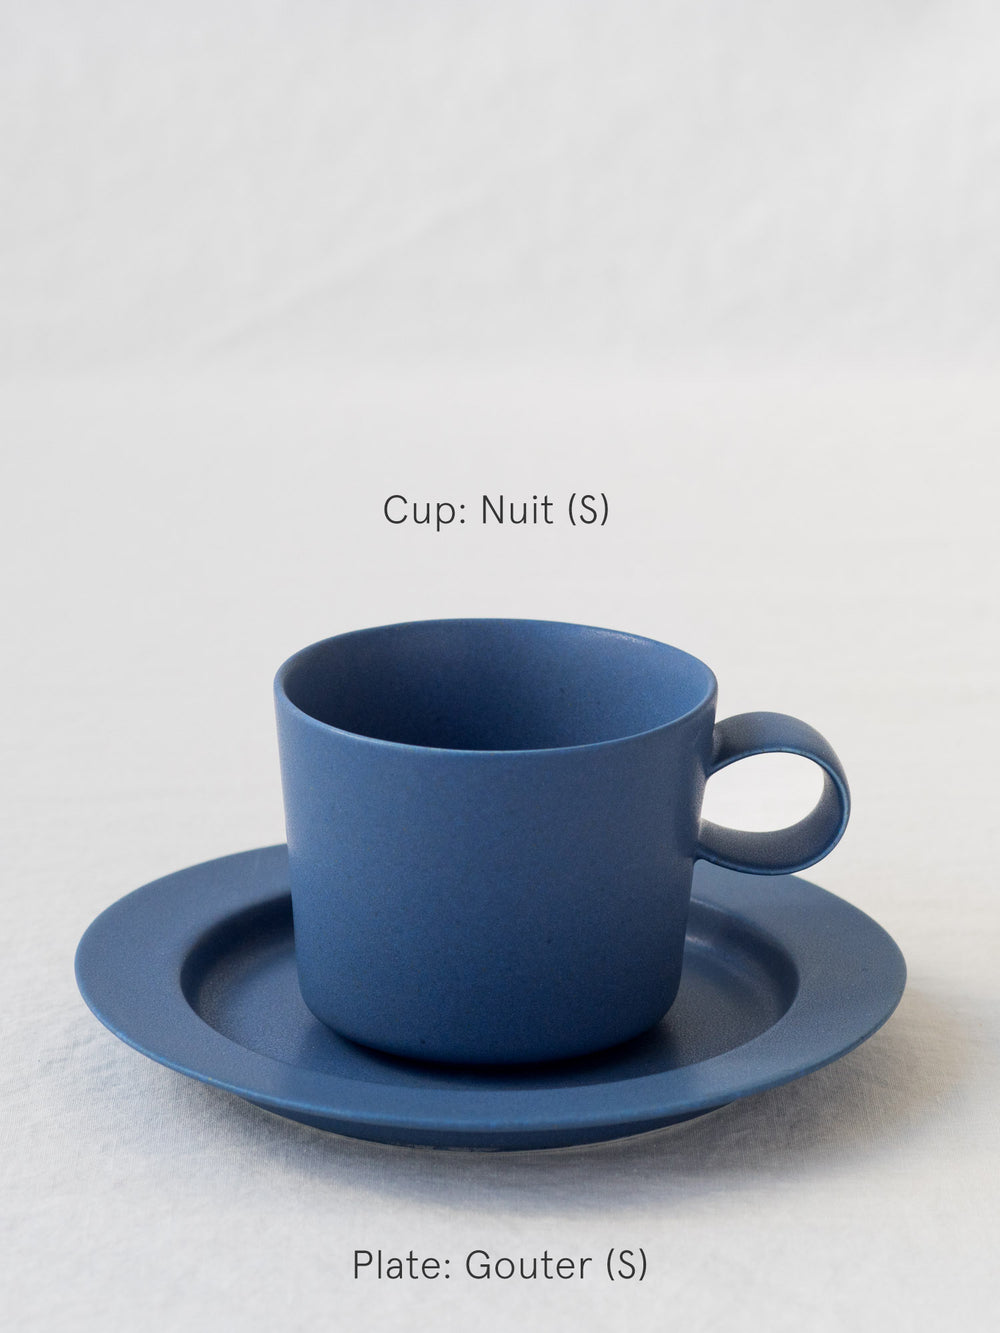 Unjour Cup – Ruri